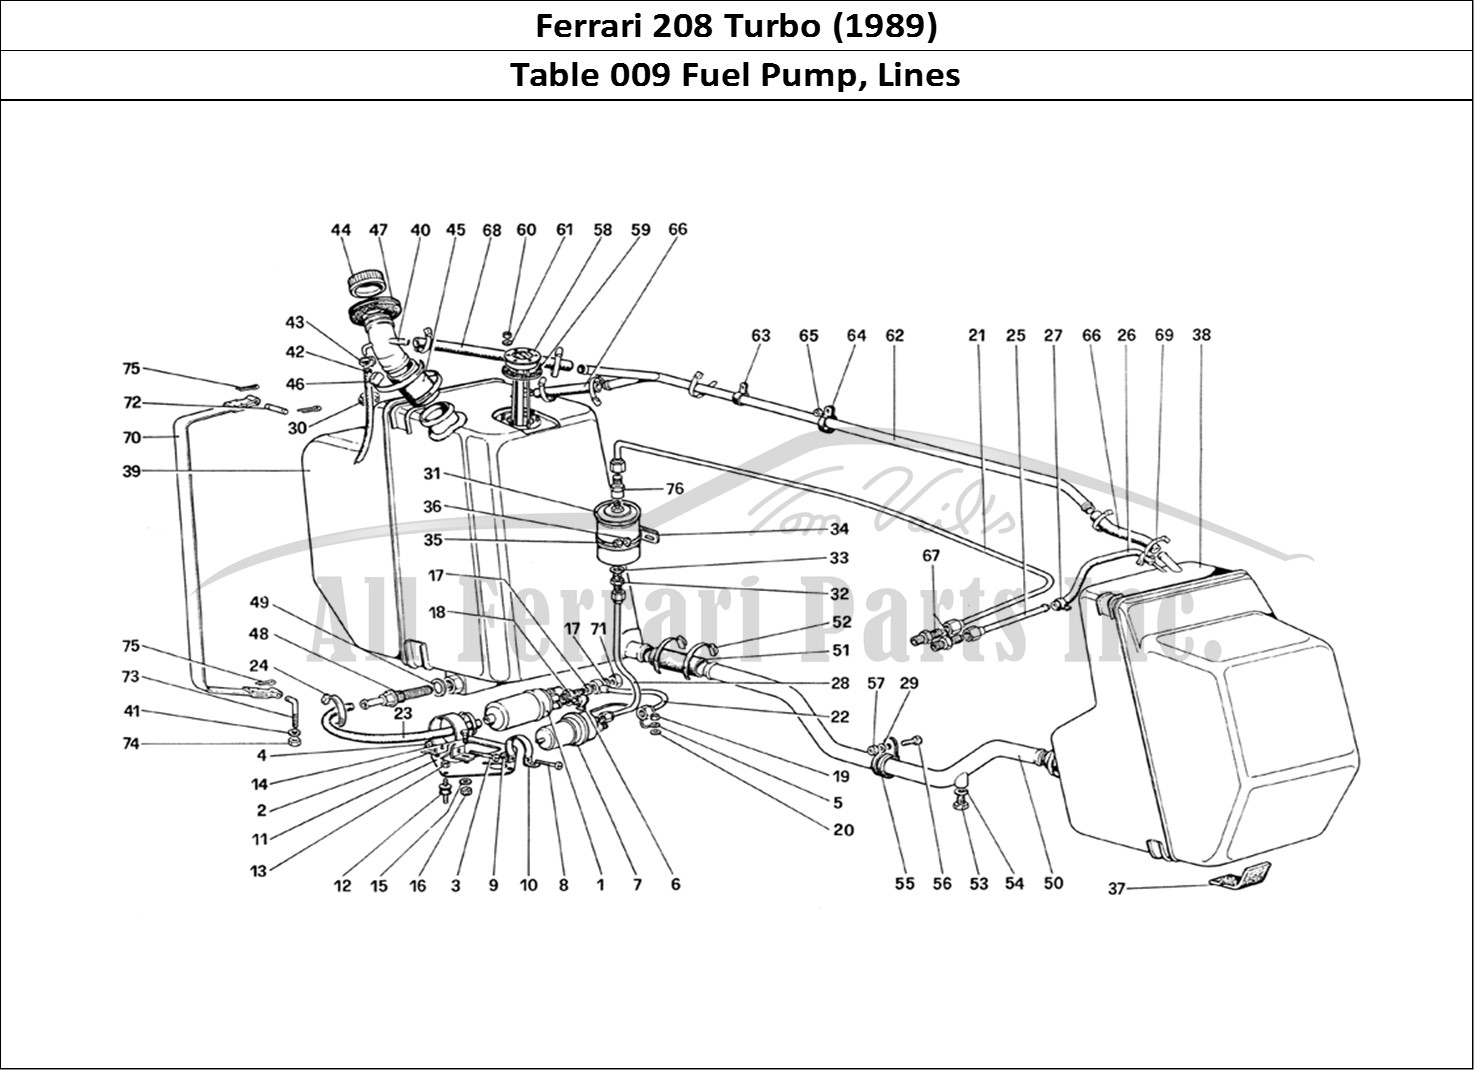 Ferrari Parts Ferrari 208 Turbo (1989) Page 009 Fuel Pump and Pipes